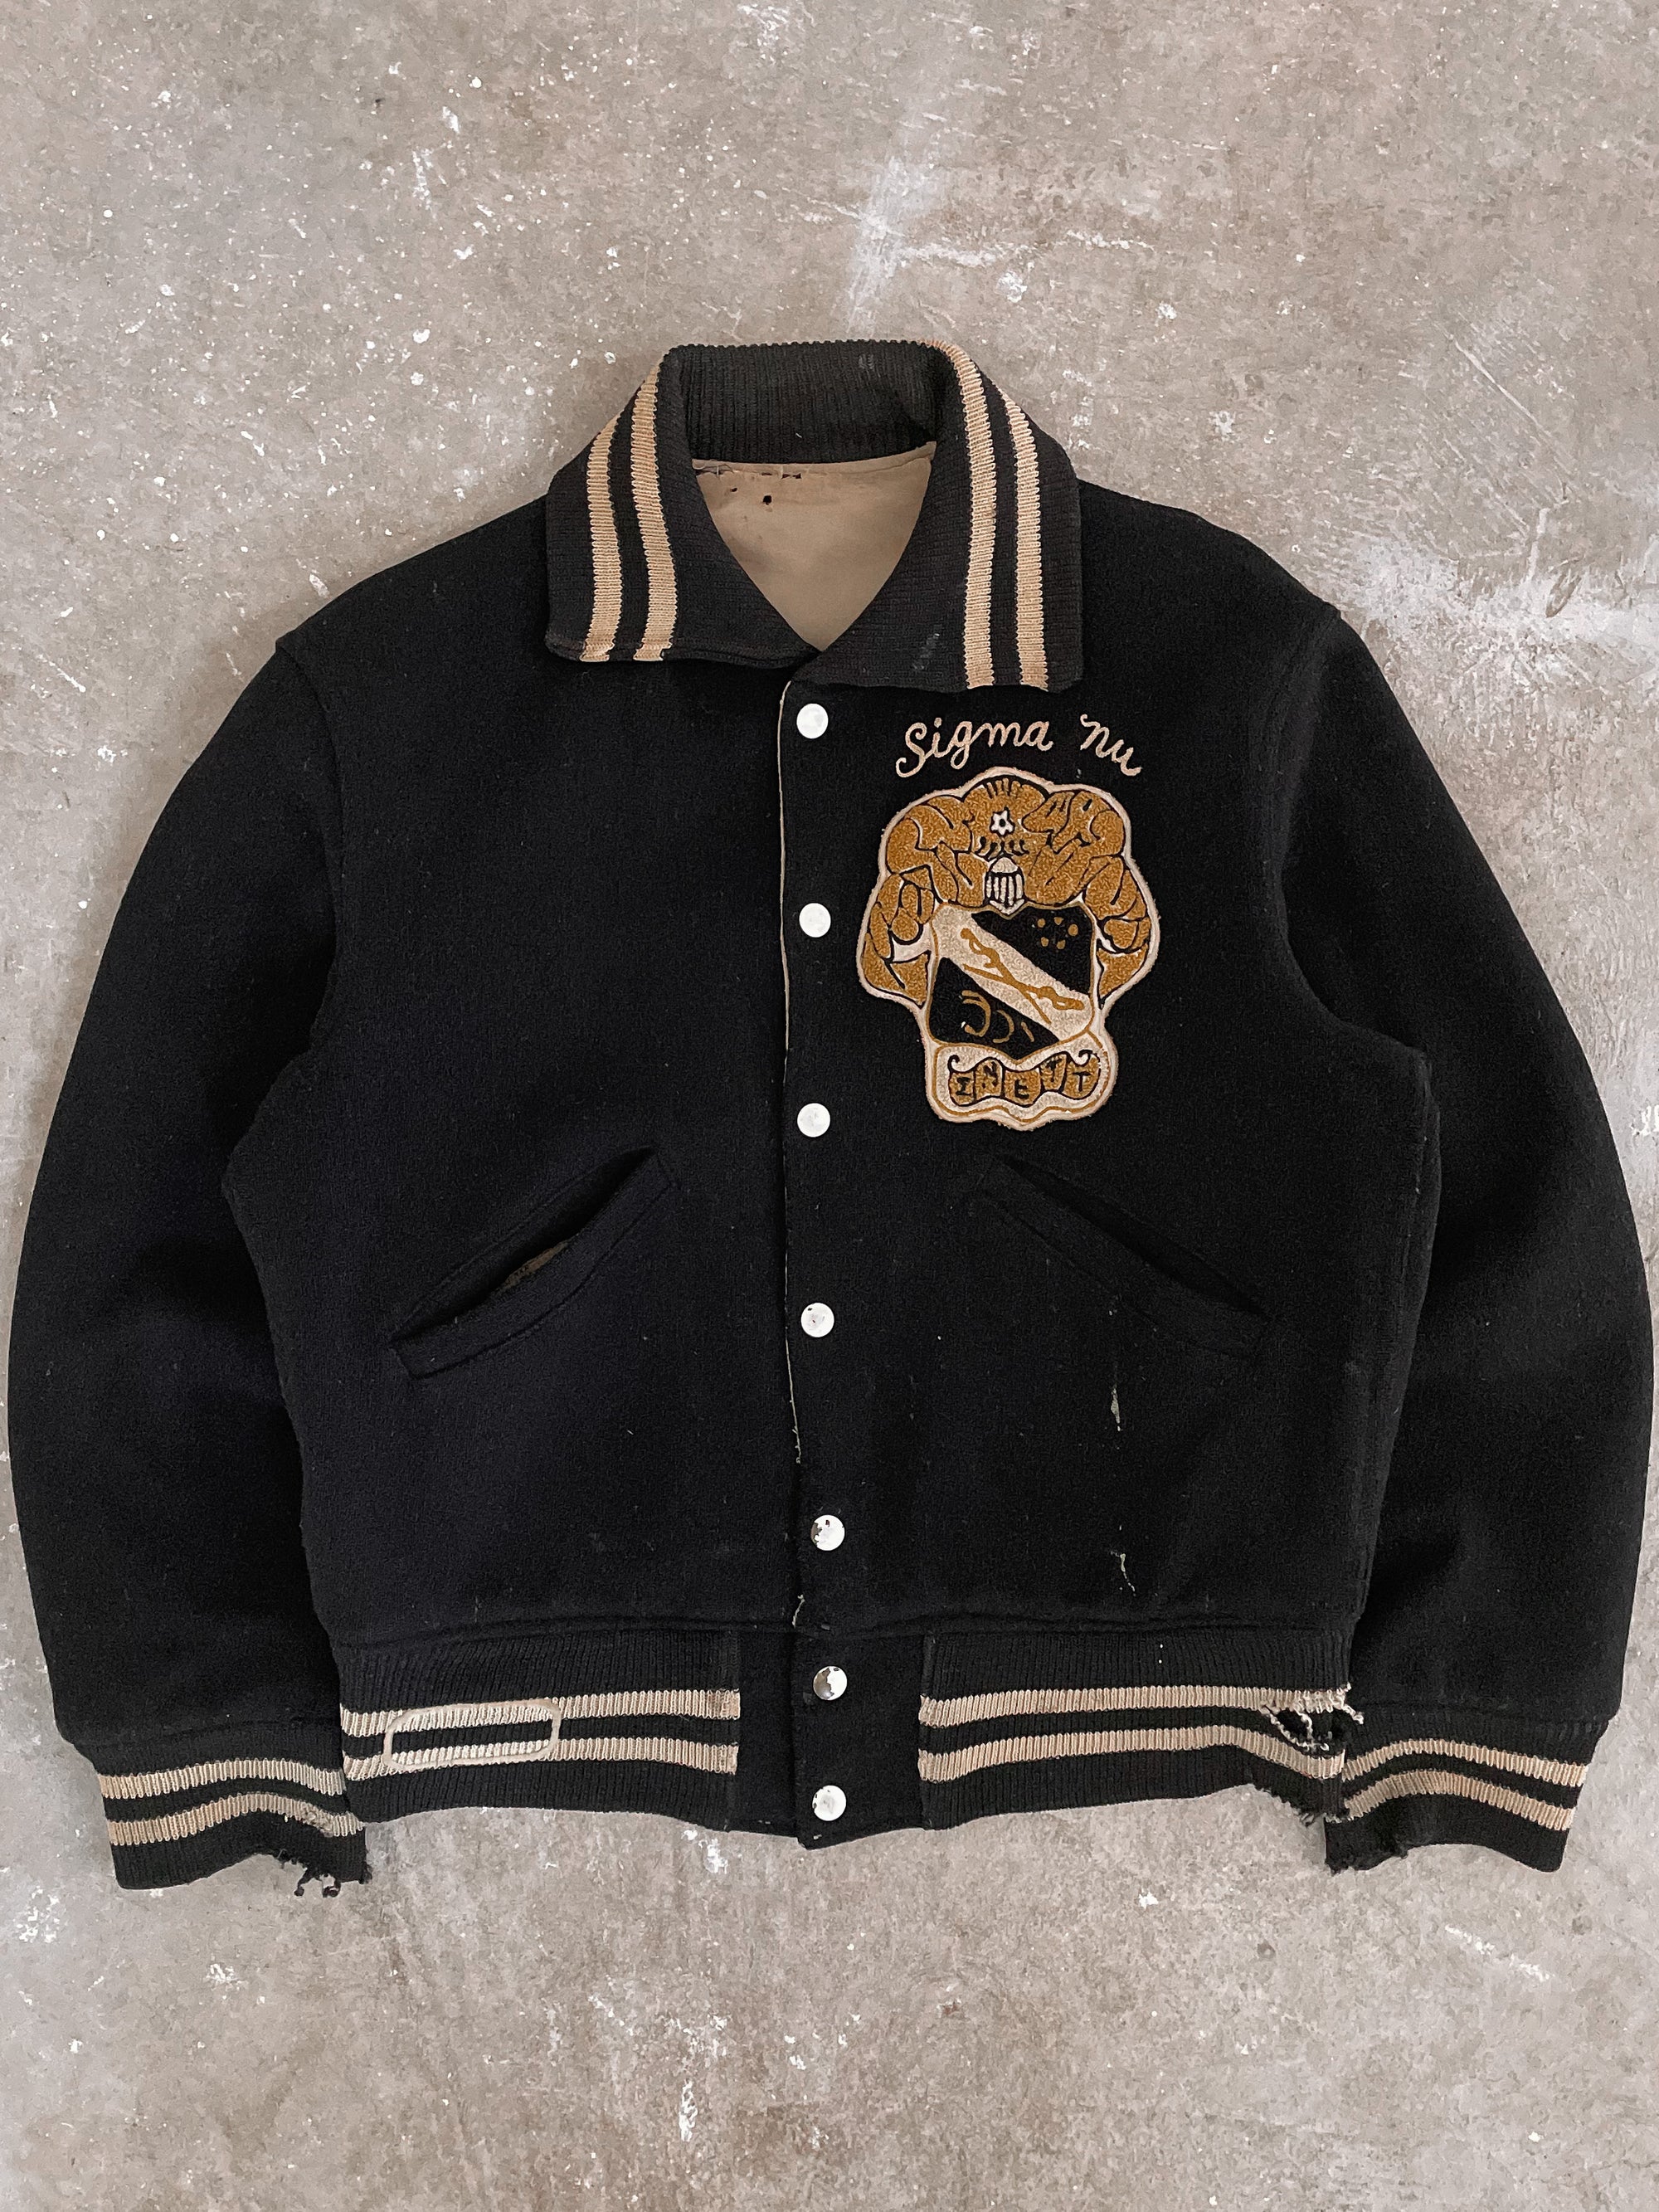 1950s “Sigma Nu” Chain Stitched Varsity Jacket (M)